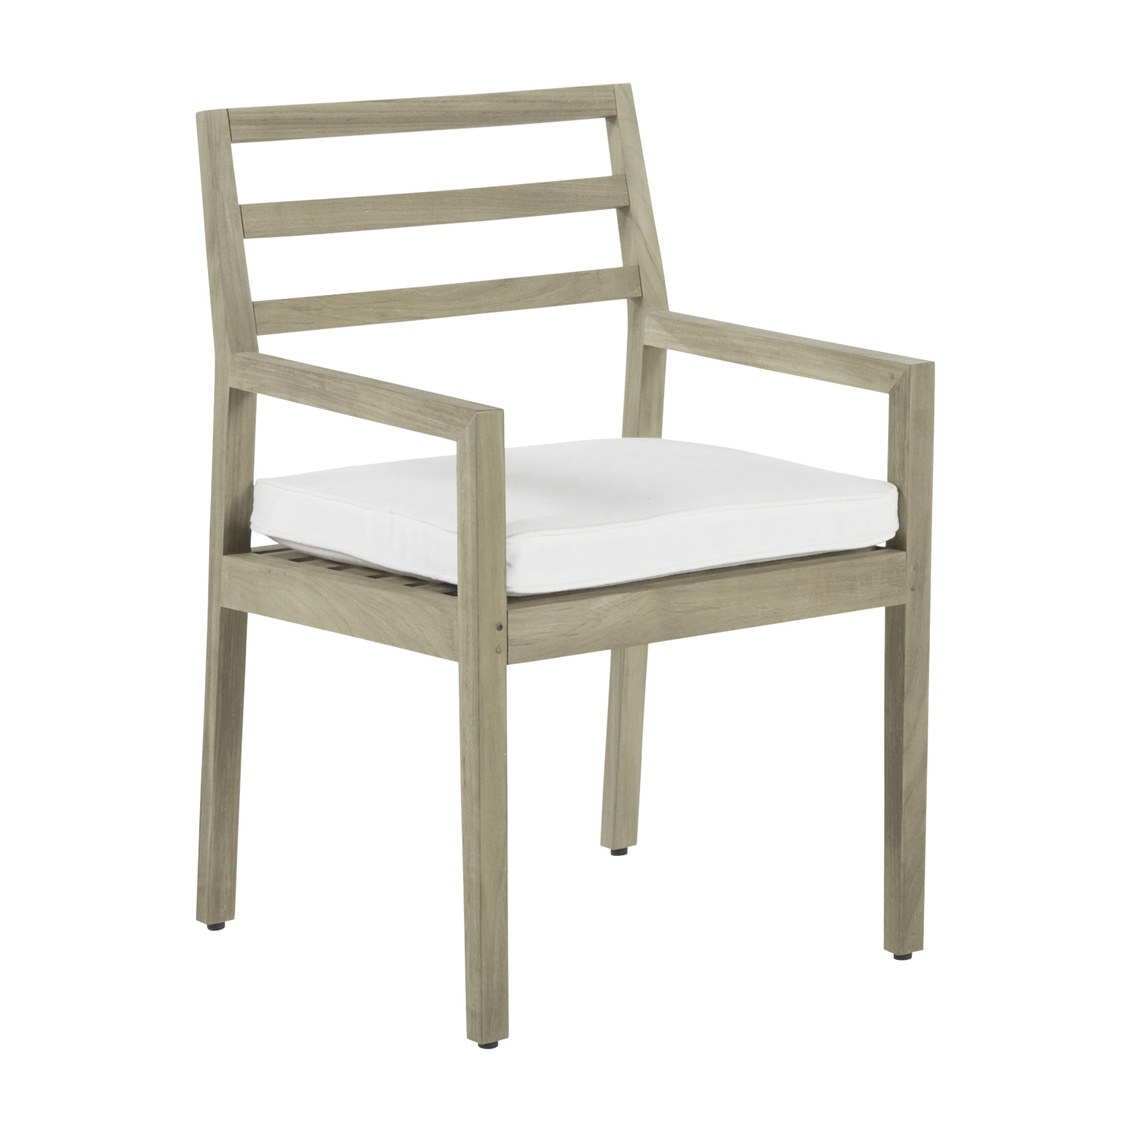 santa barbara teak arm chair in oyster teak – frame only product image